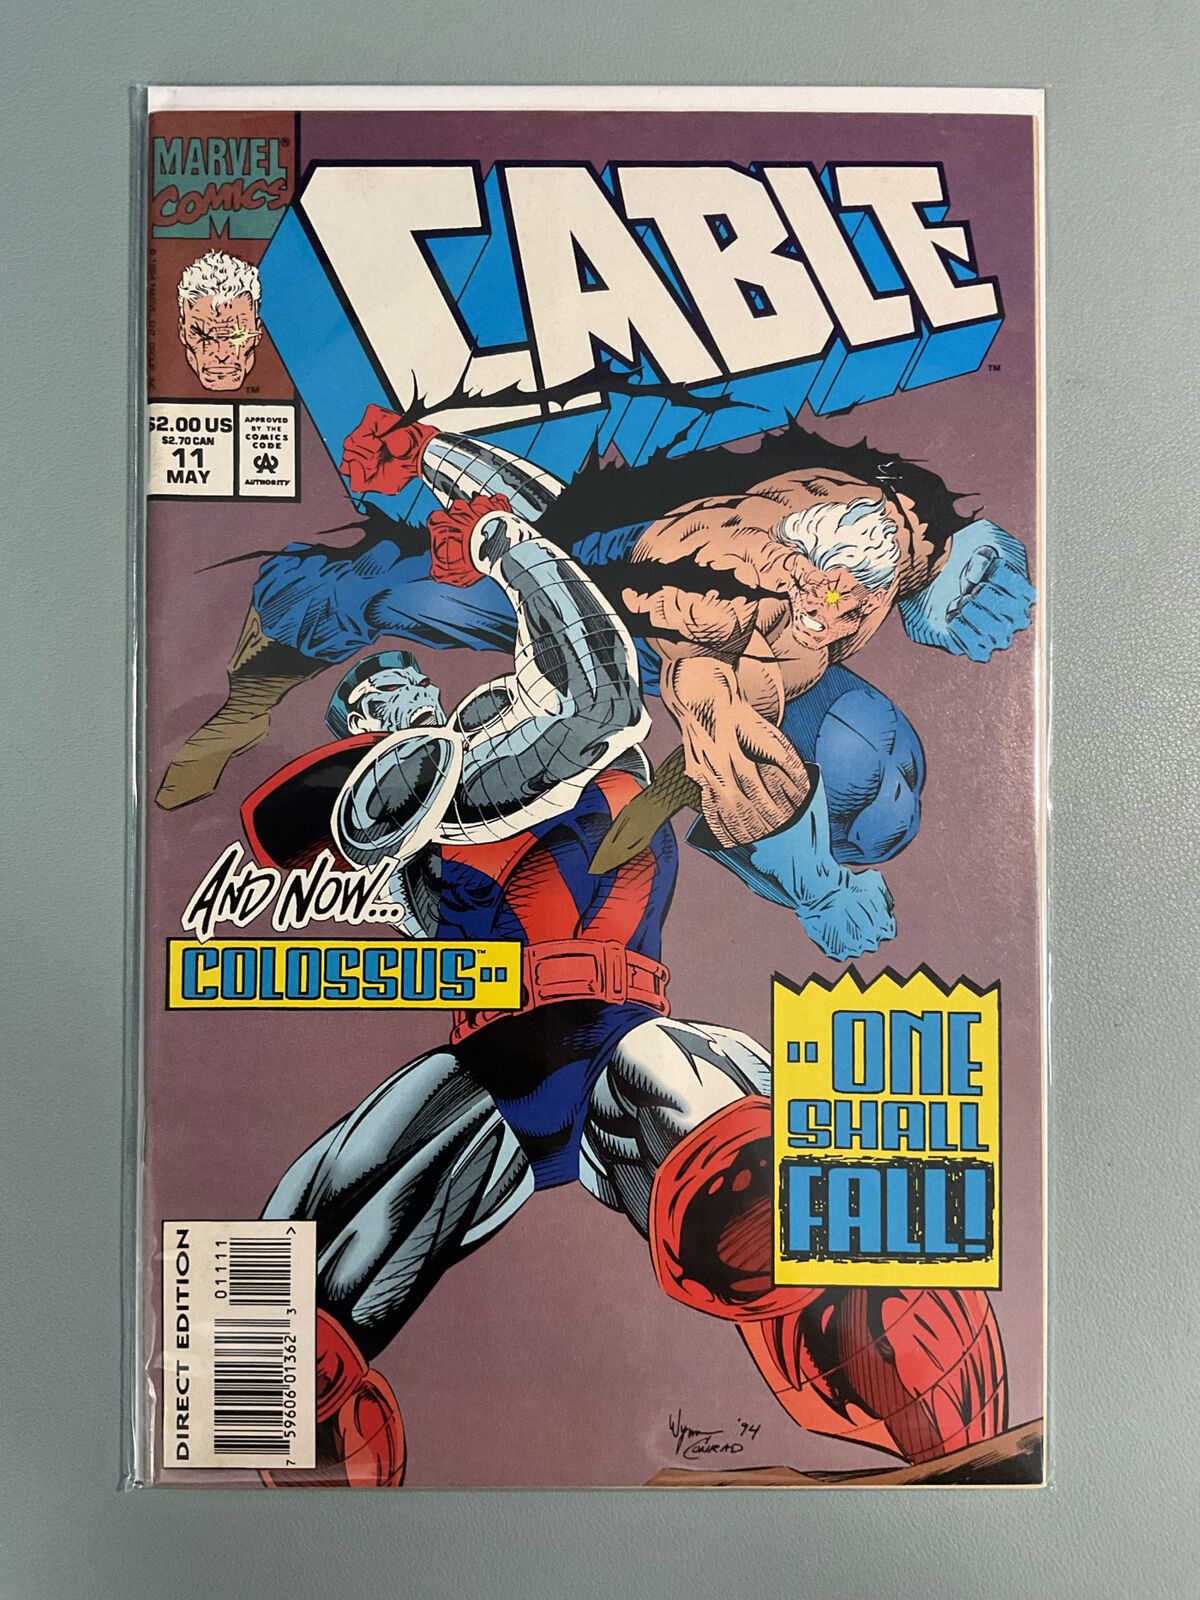 Cable(vol. 1) #11 - Marvel Comics - Combine Shipping